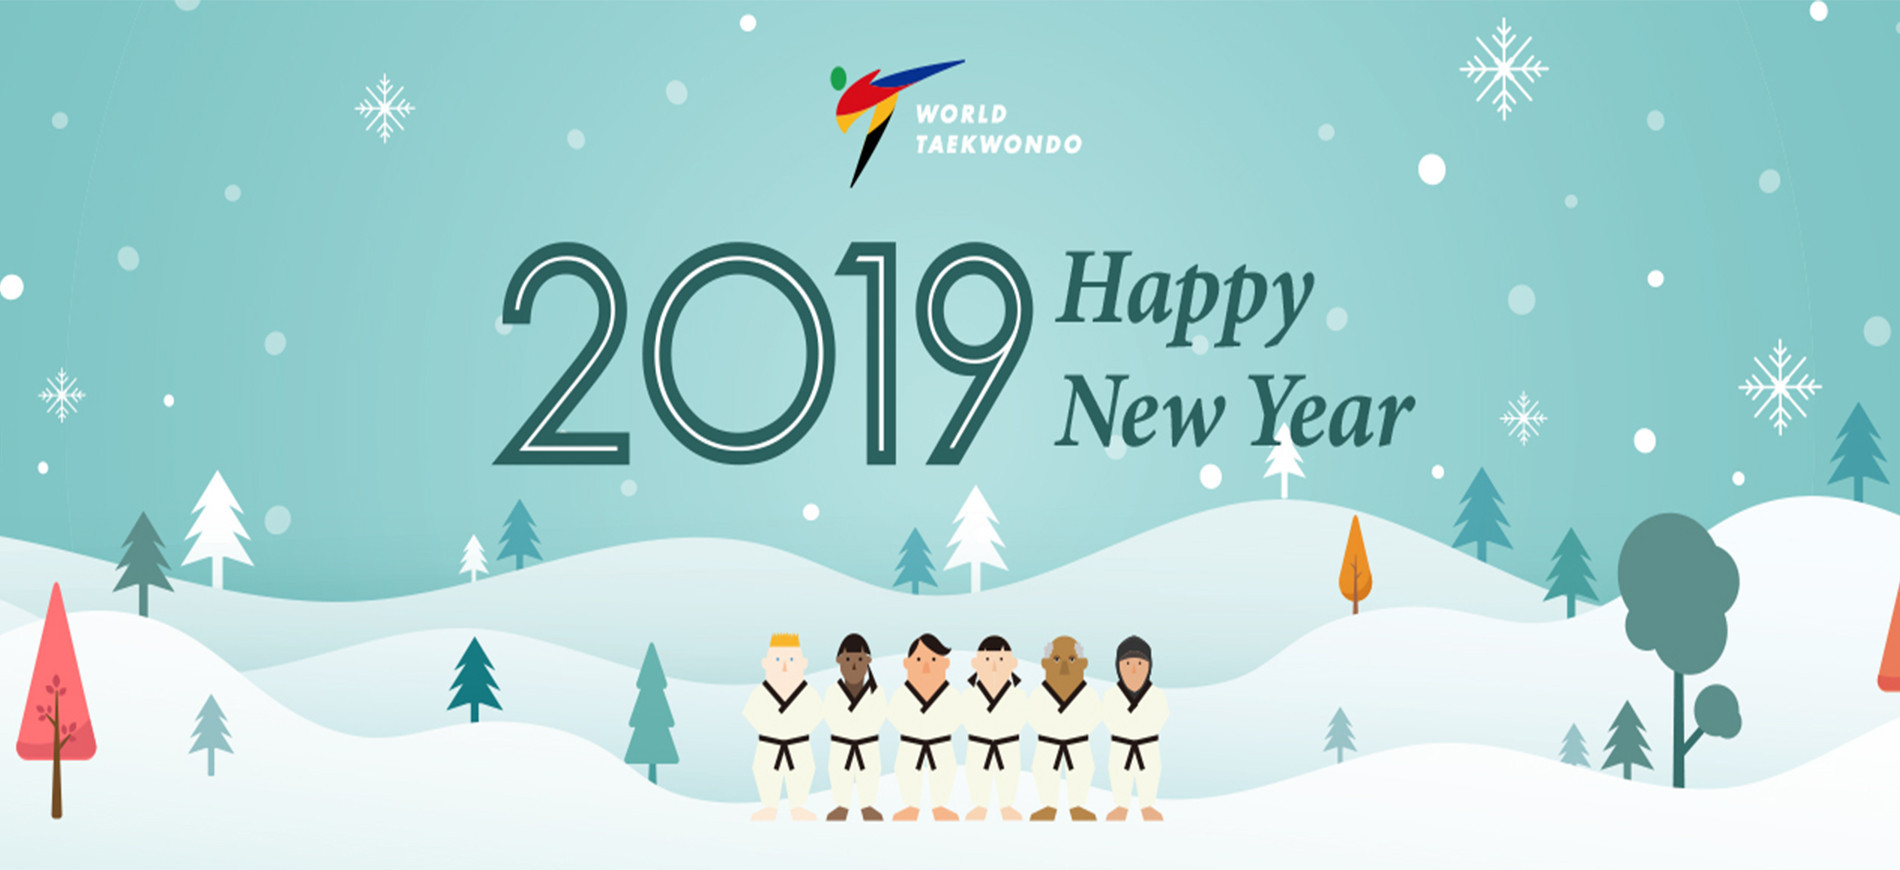 World Taekwondo President Chungwon Choue described 2018 as "tremendous" in his end of year address ©World Taekwondo